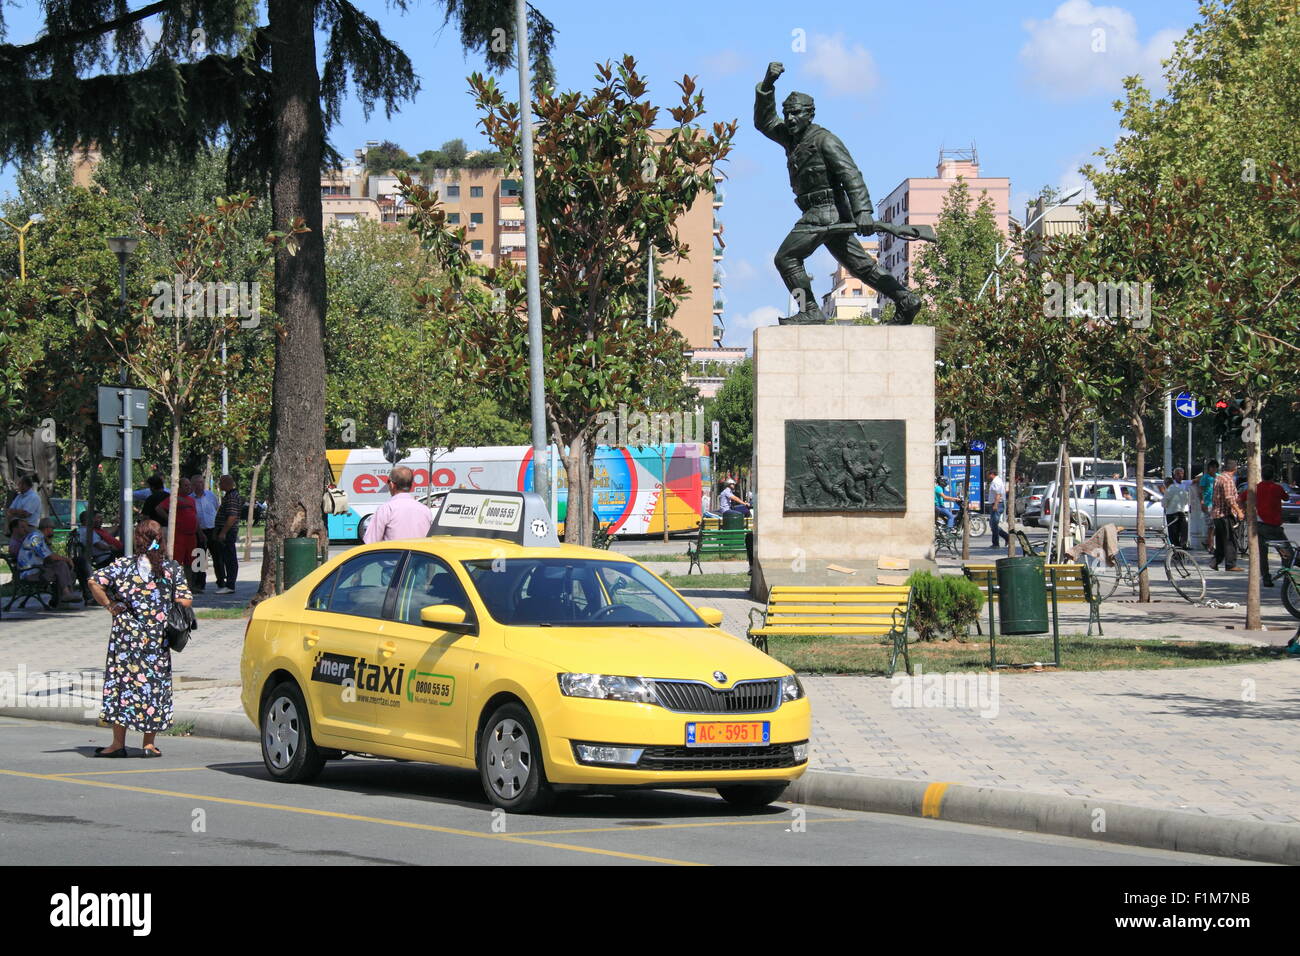 Denkmal für einen unbekannten Partisan, Rruga Xhorxhi W Bush, Tirana, Albanien, Balkan, Europa Stockfoto